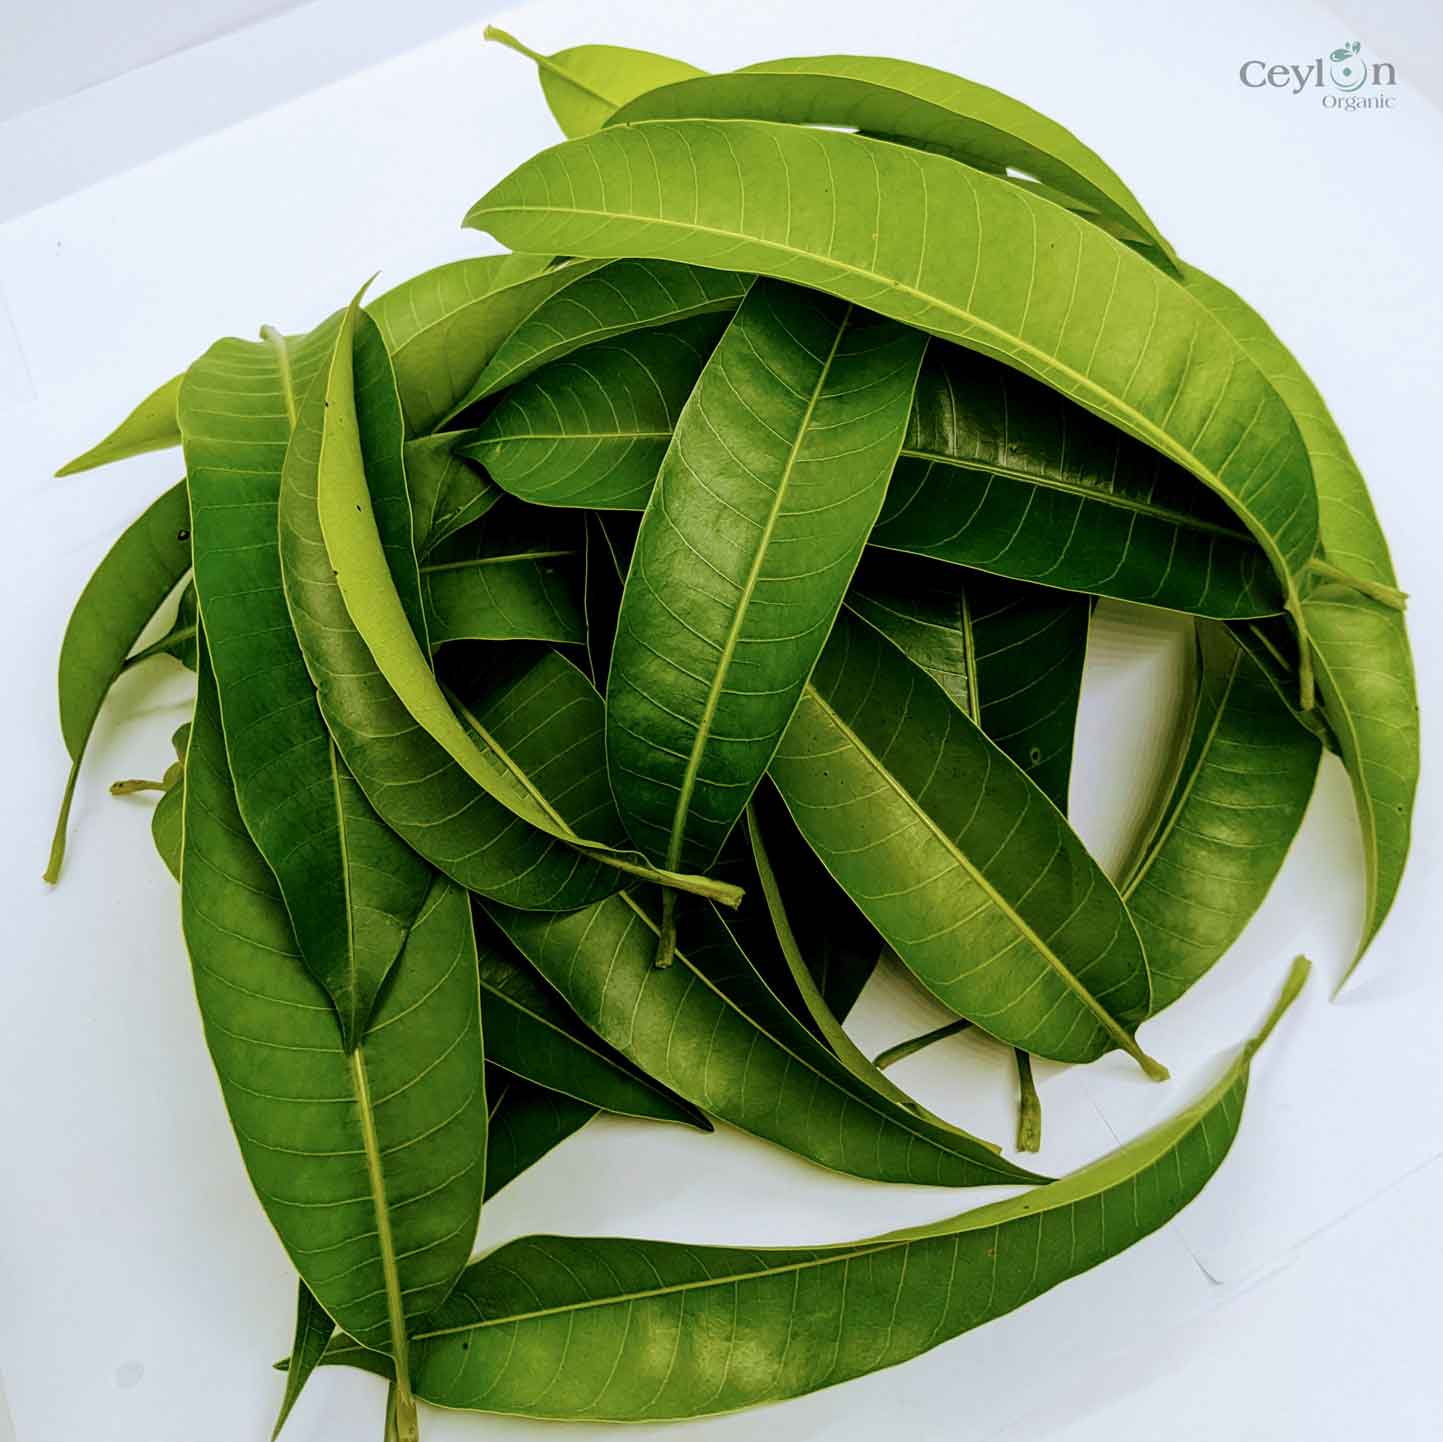 green mango leaves